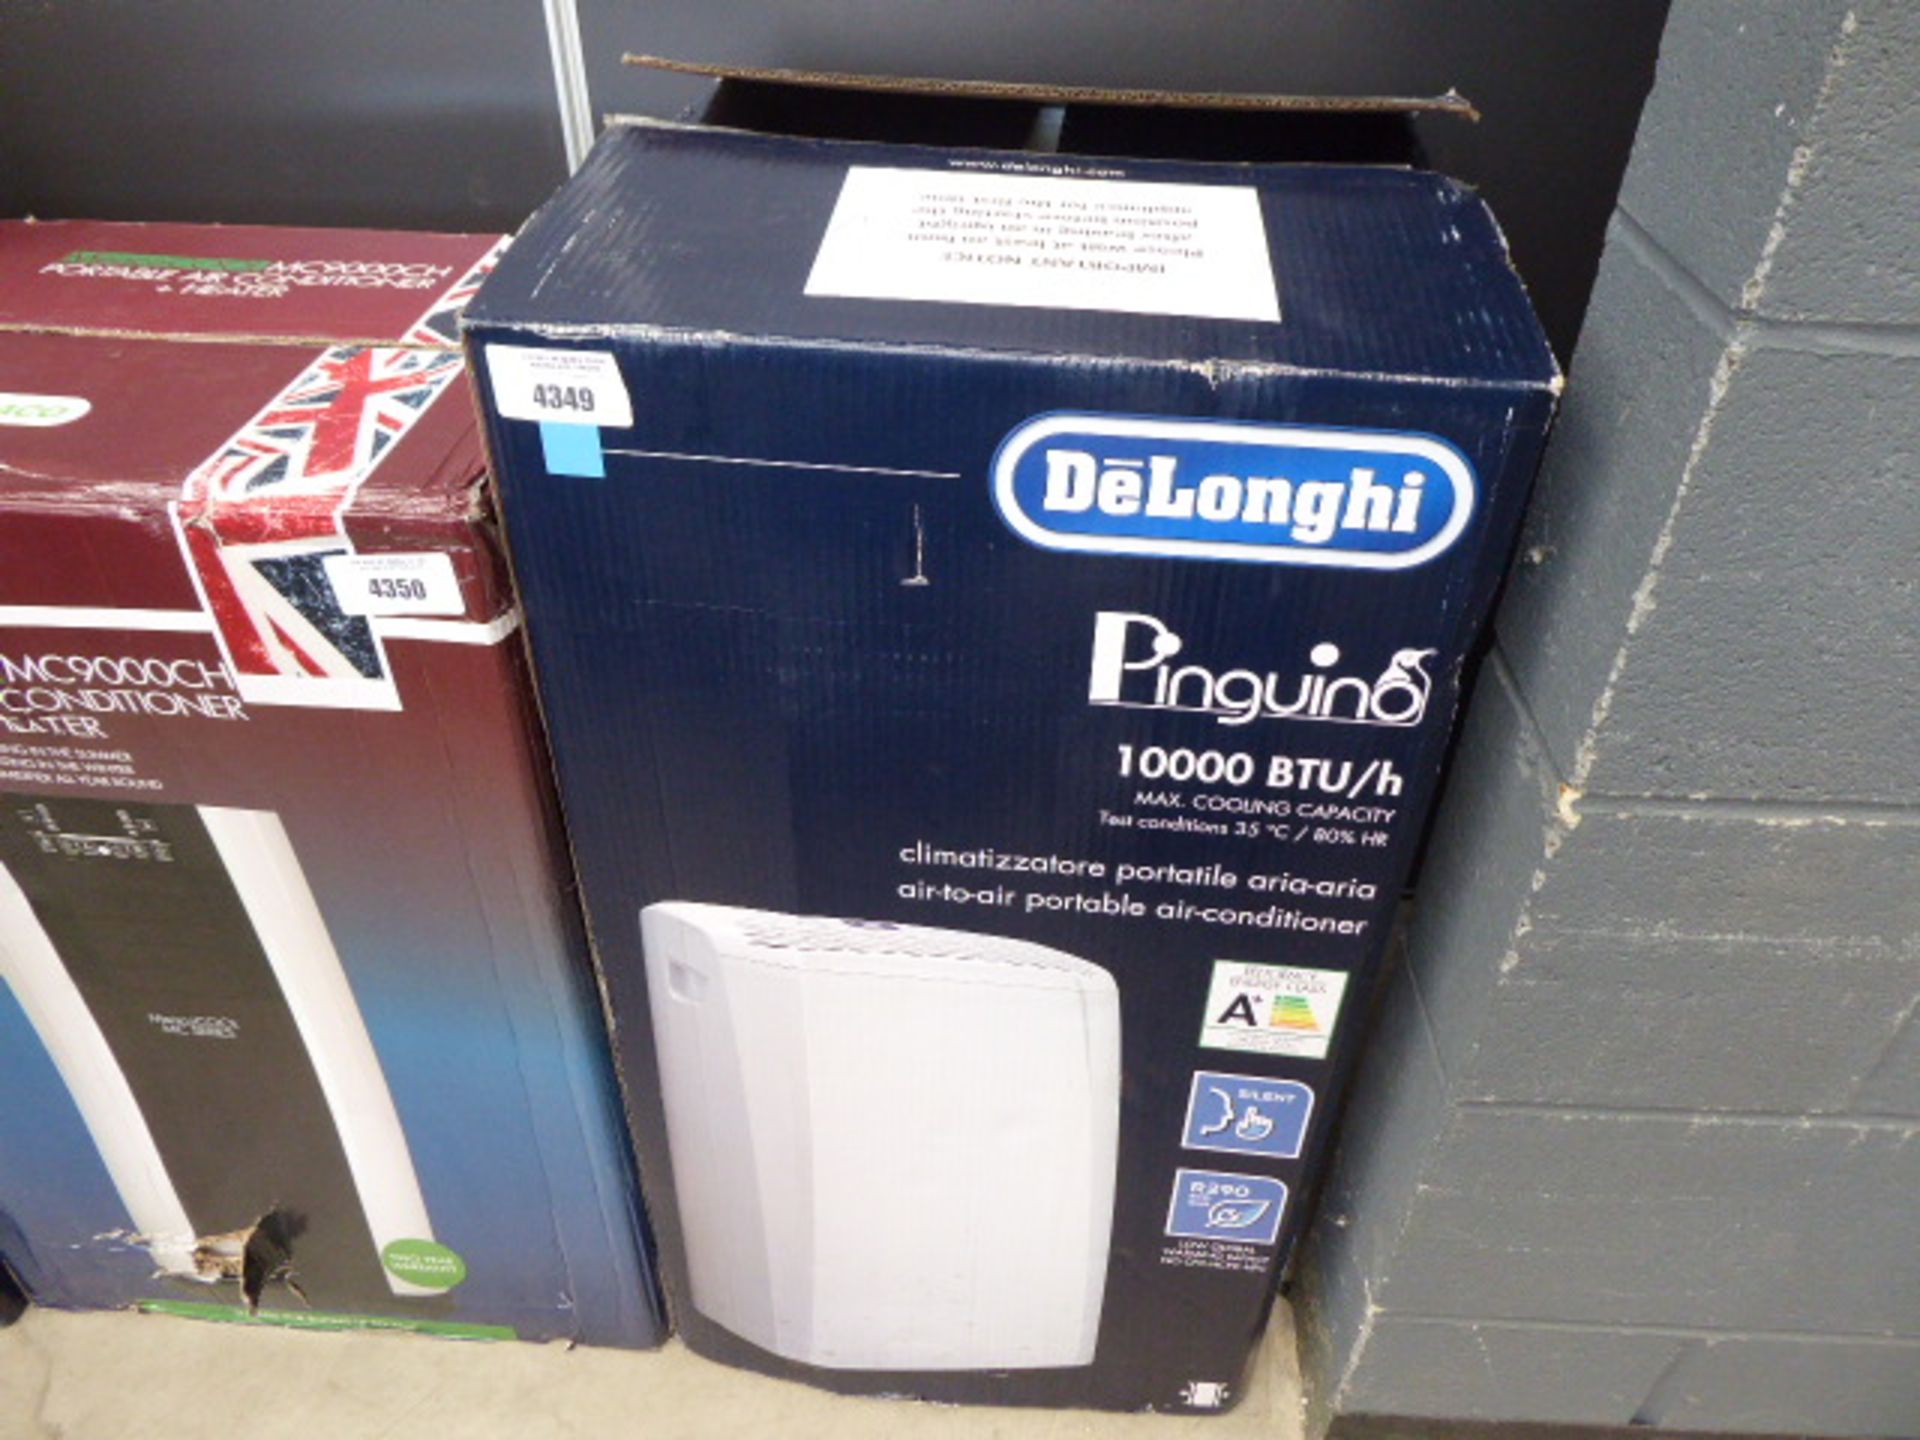 Delonghi boxed air conditioning unit